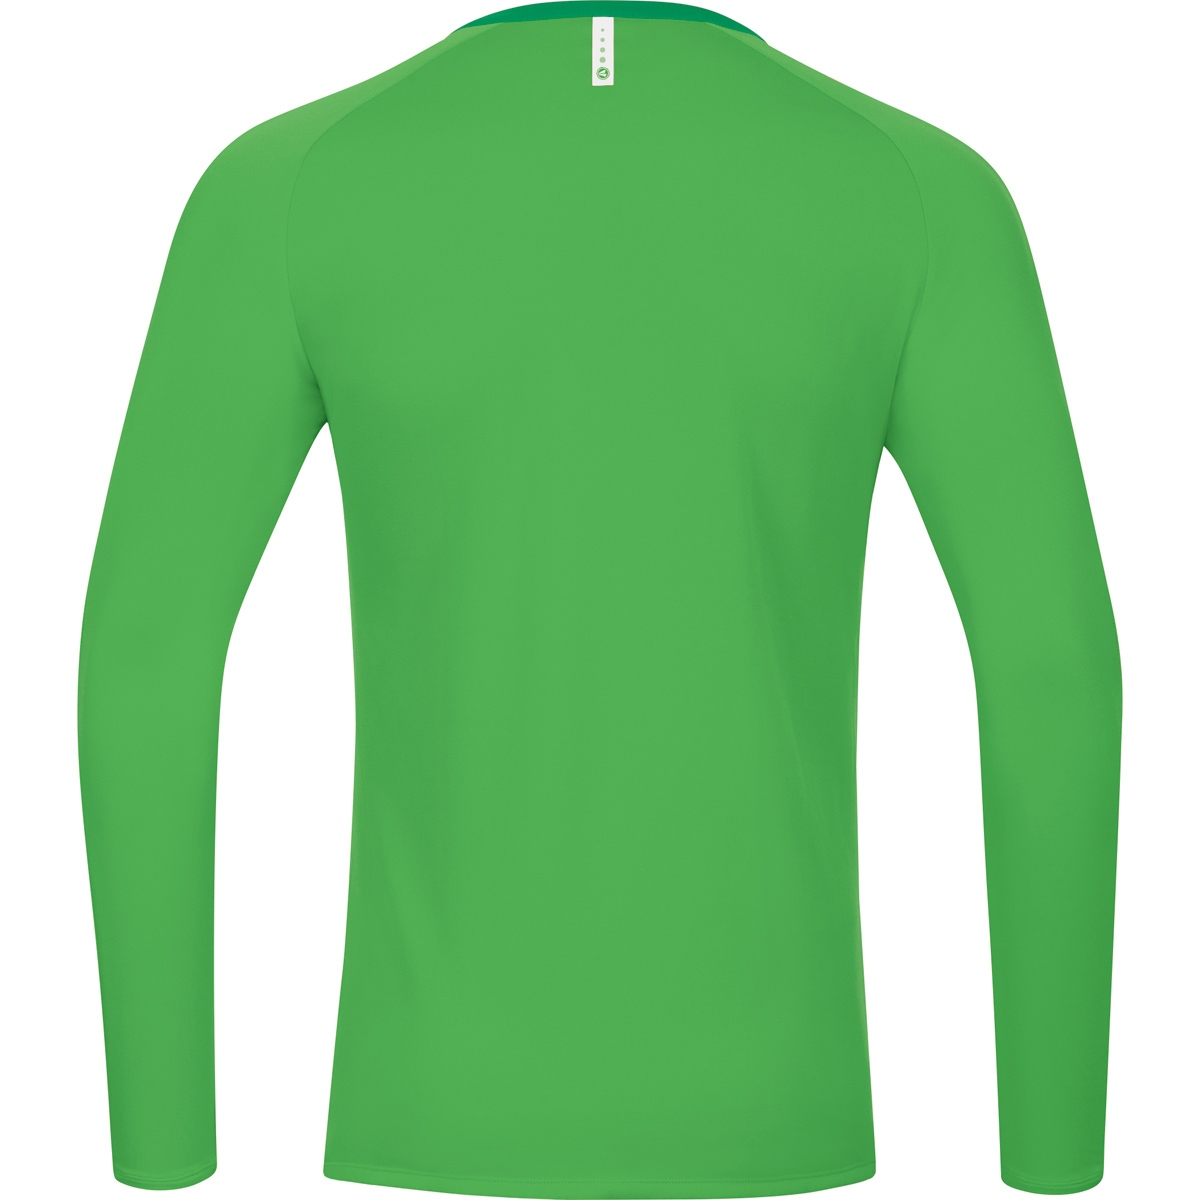 2.0 8820 green/sportgrün, Gr. L, Champ Erwachsene, Sweat soft JAKO